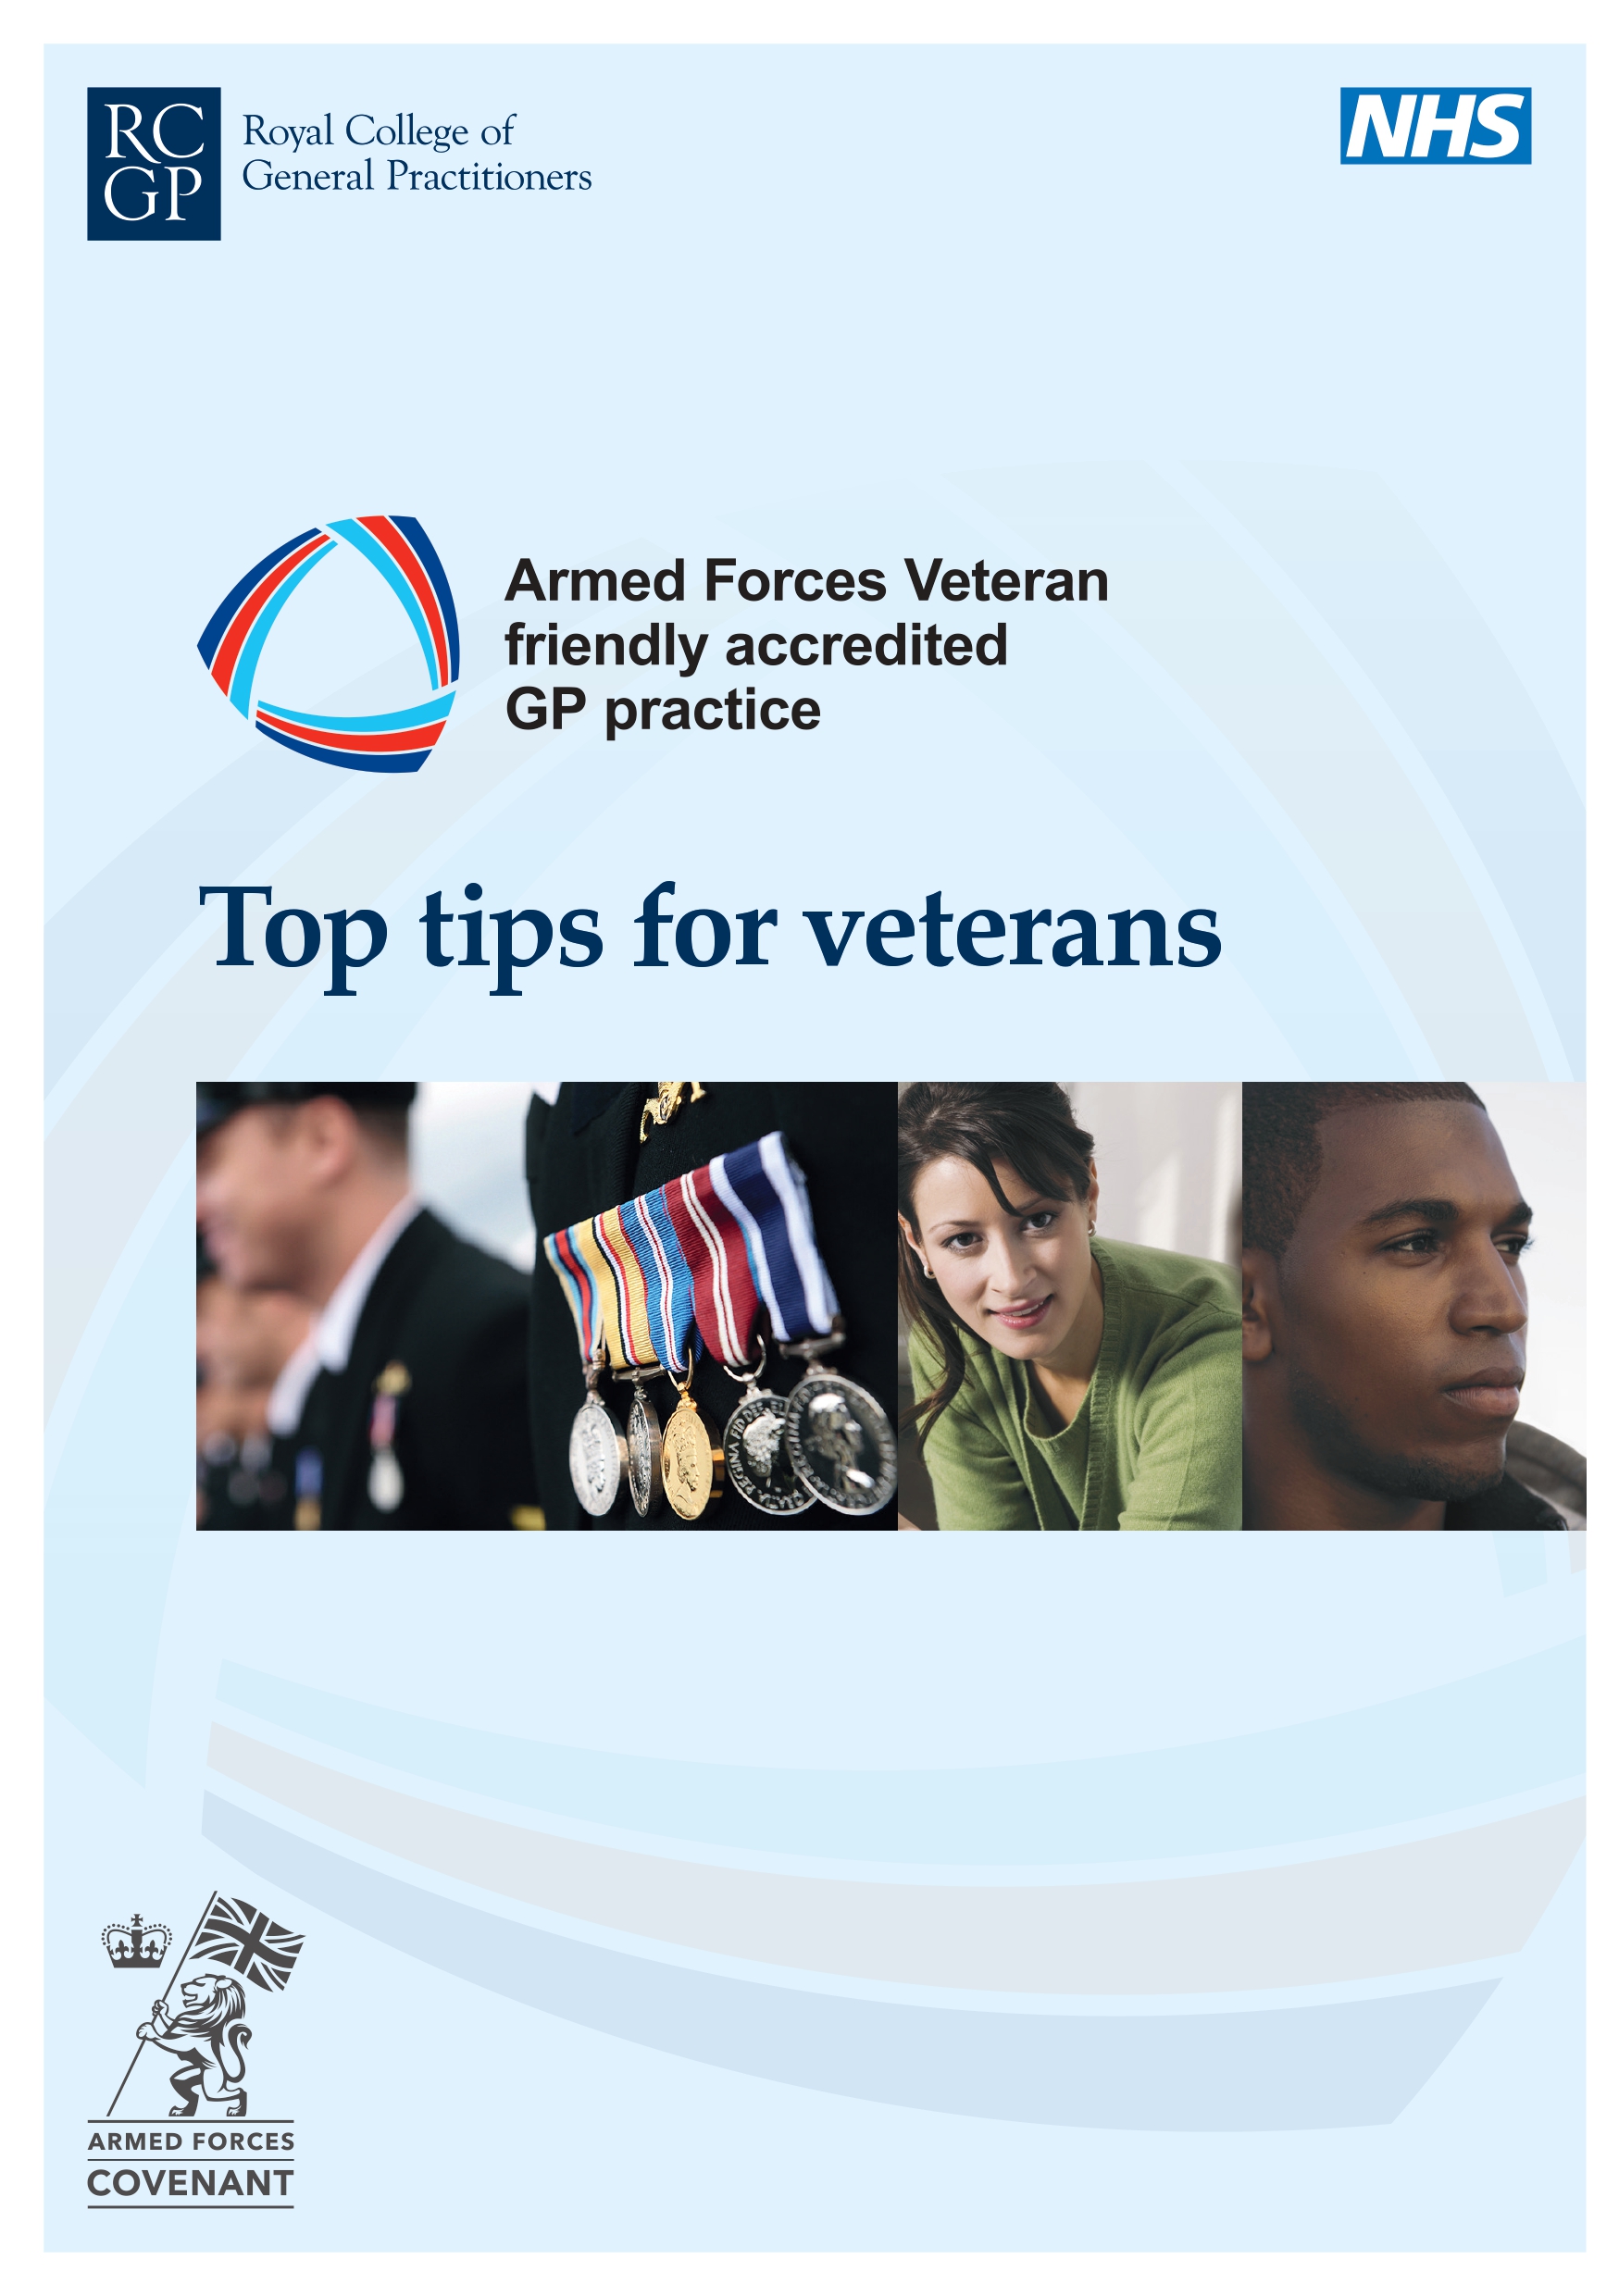 5 Top Tips for Veterans 1